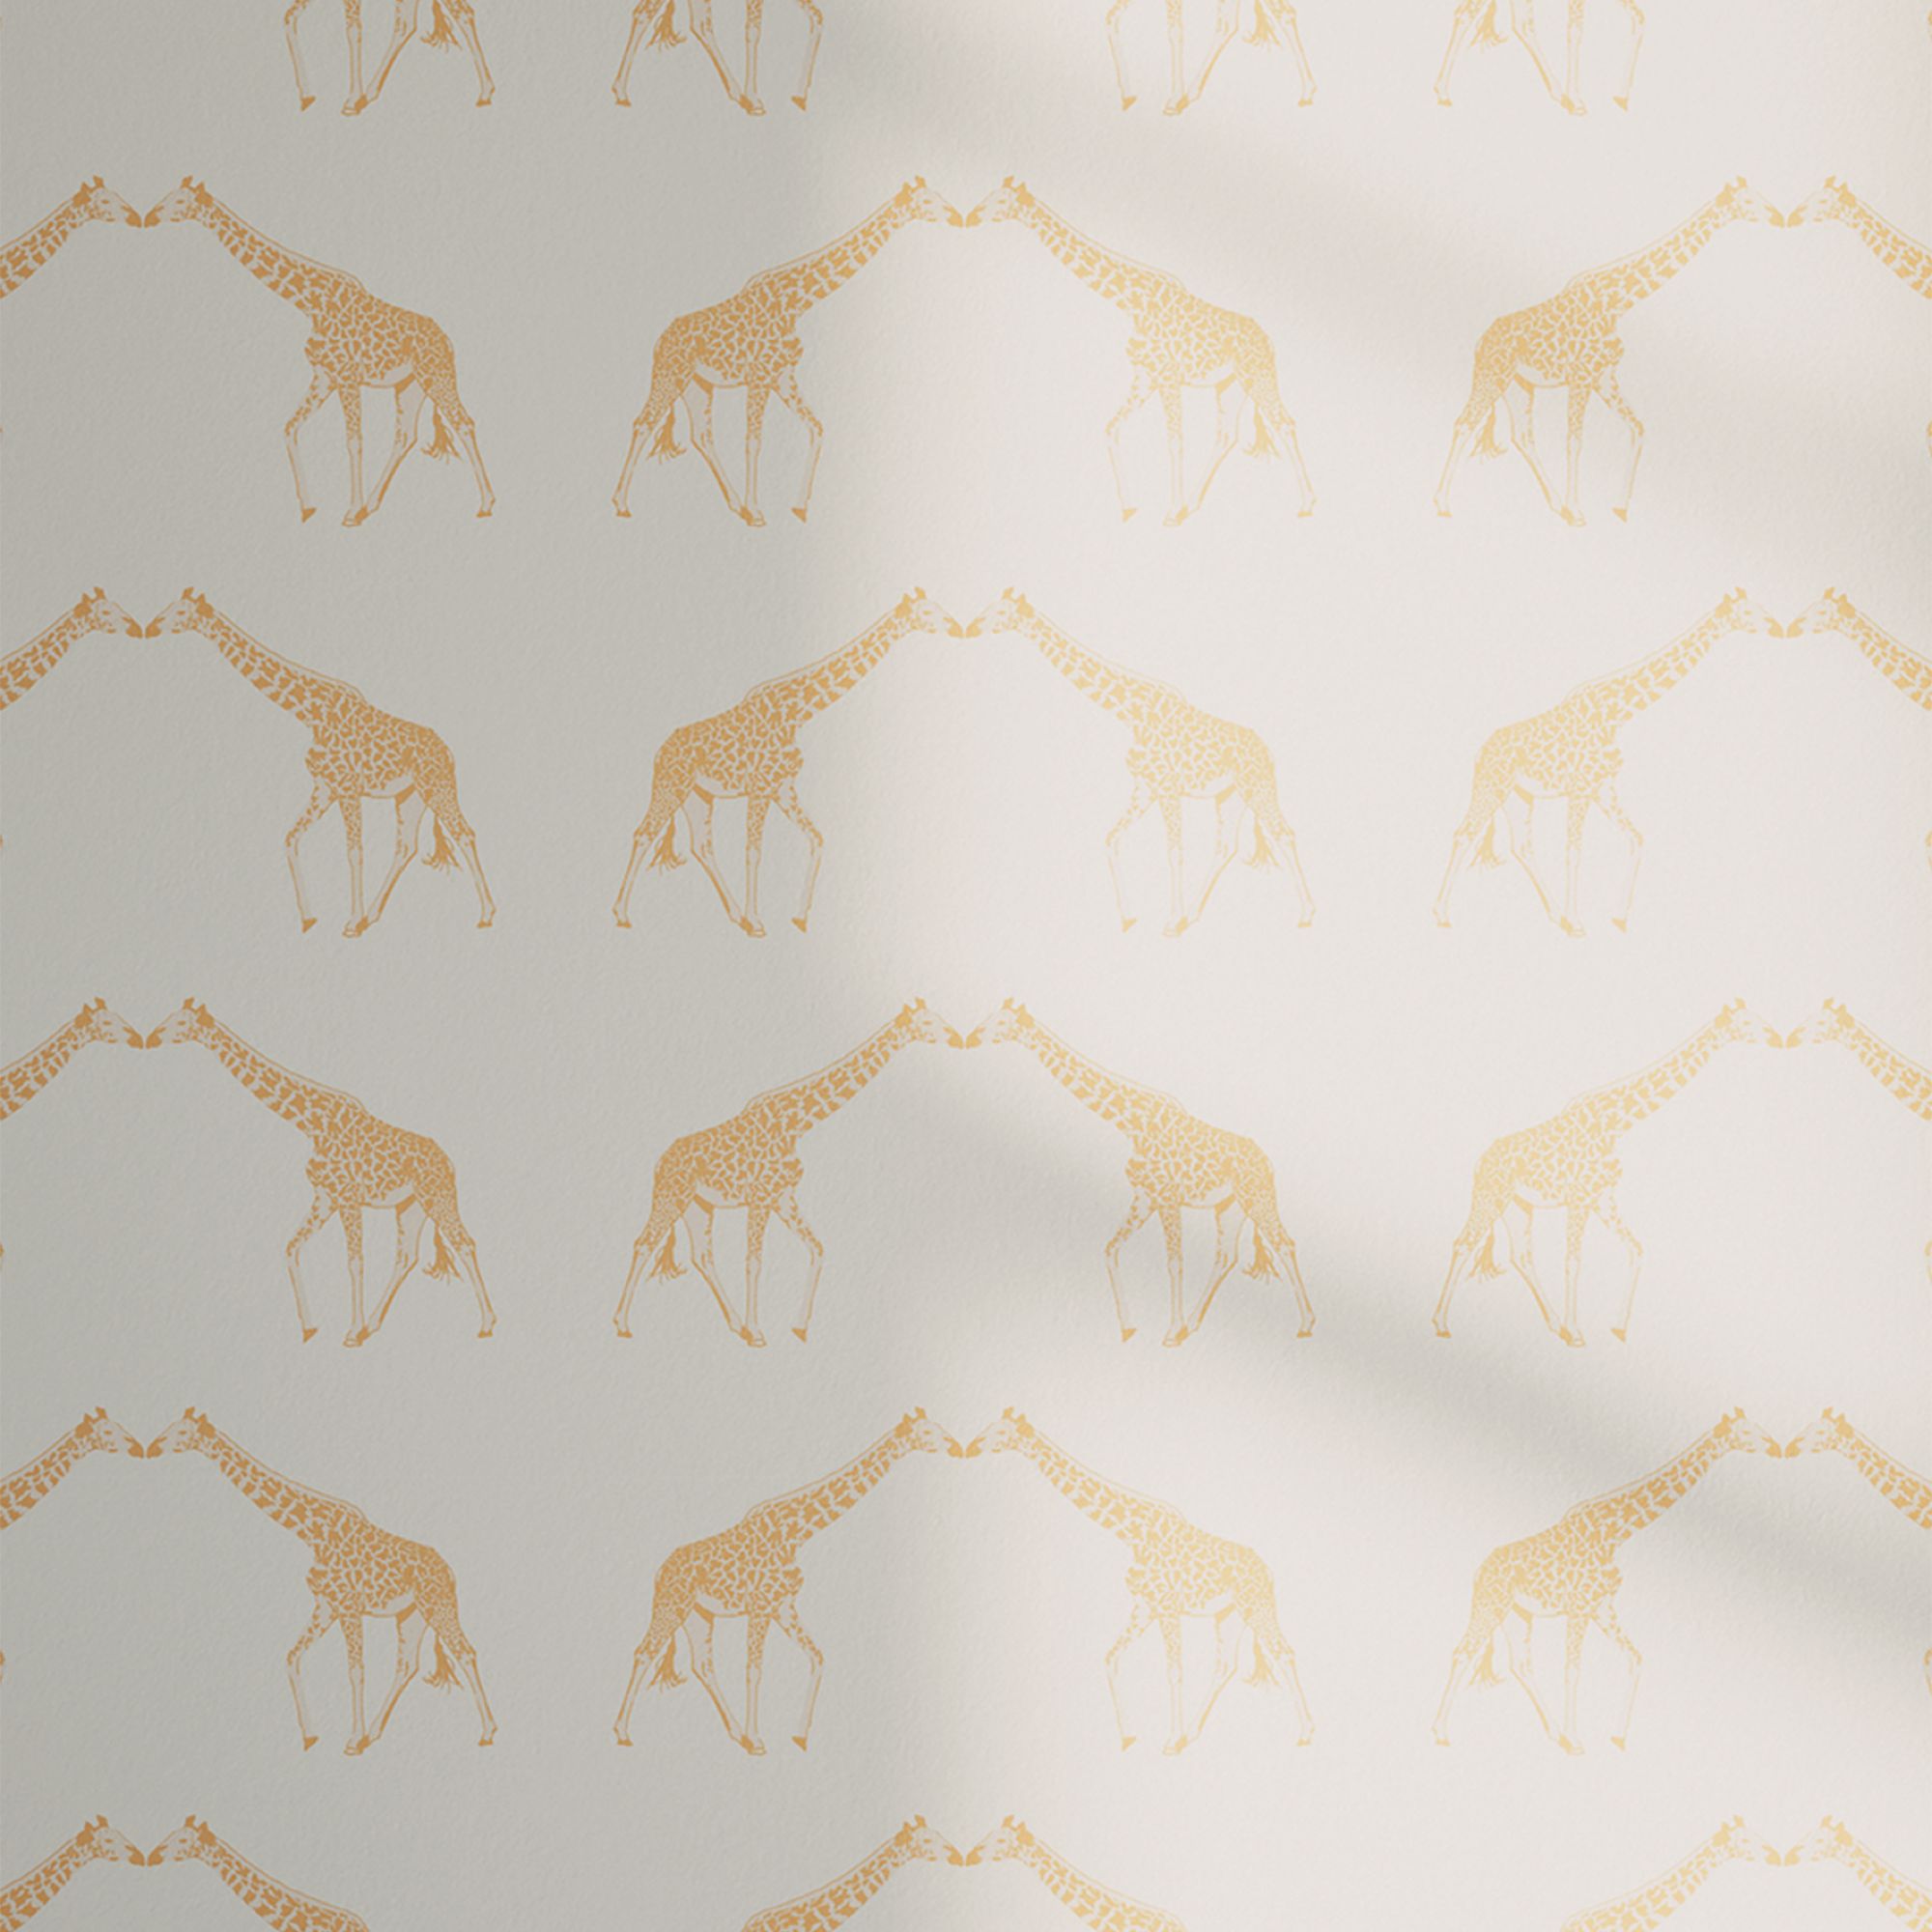 Lick White & Yellow Animal 03 Textured Wallpaper Sample